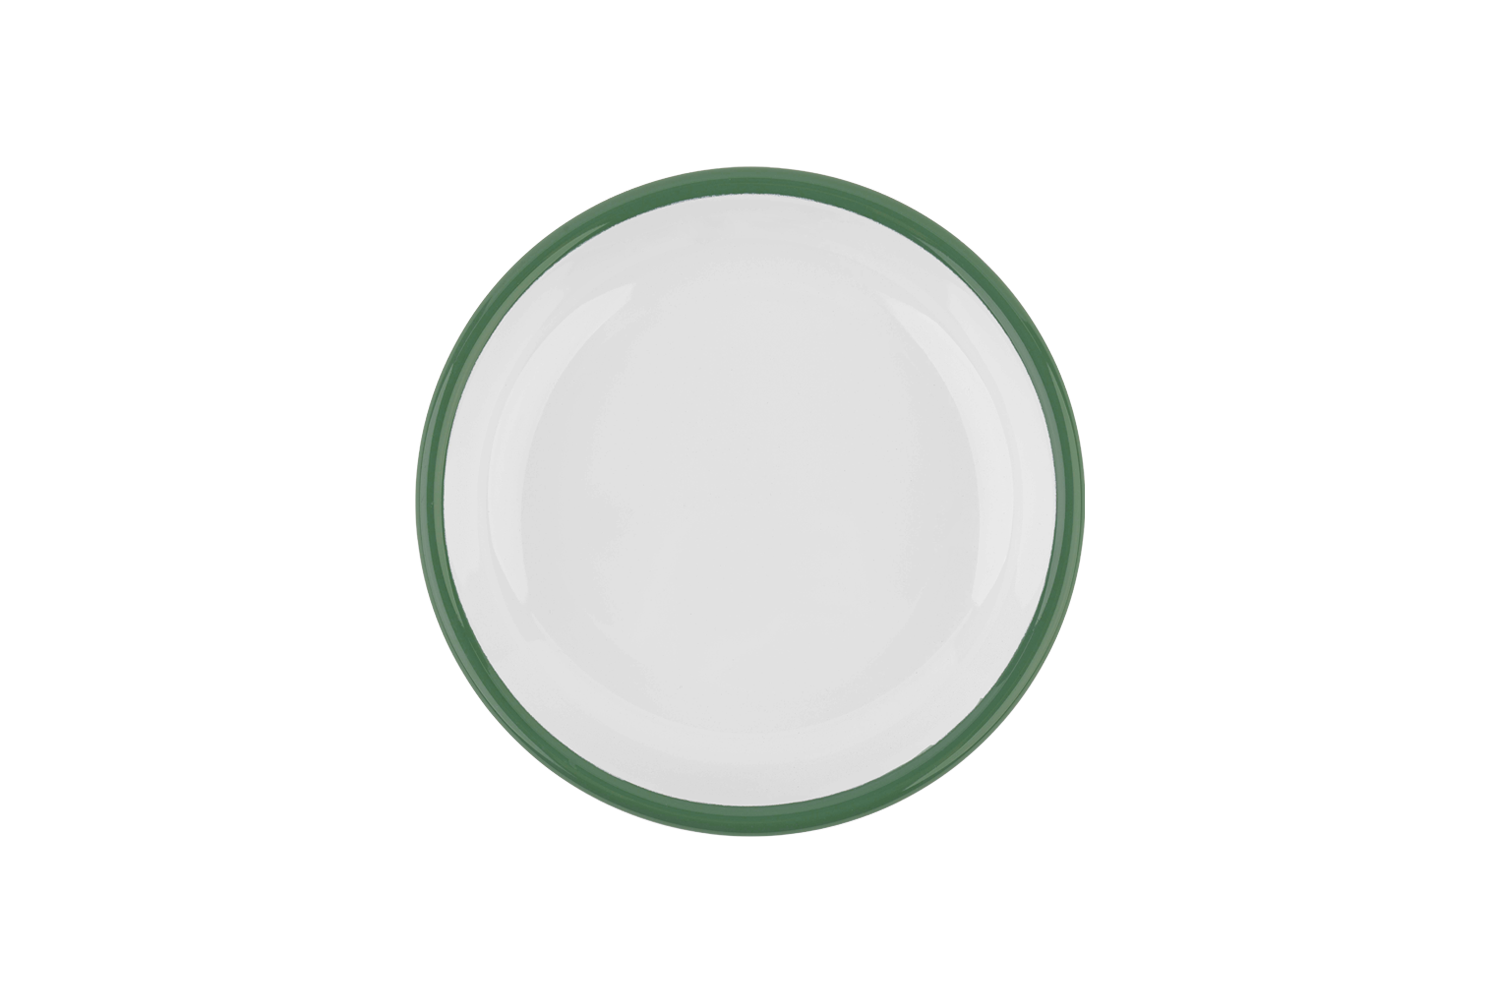 Blick ins weiße Innere des olivgrünen Emaille-Tellers